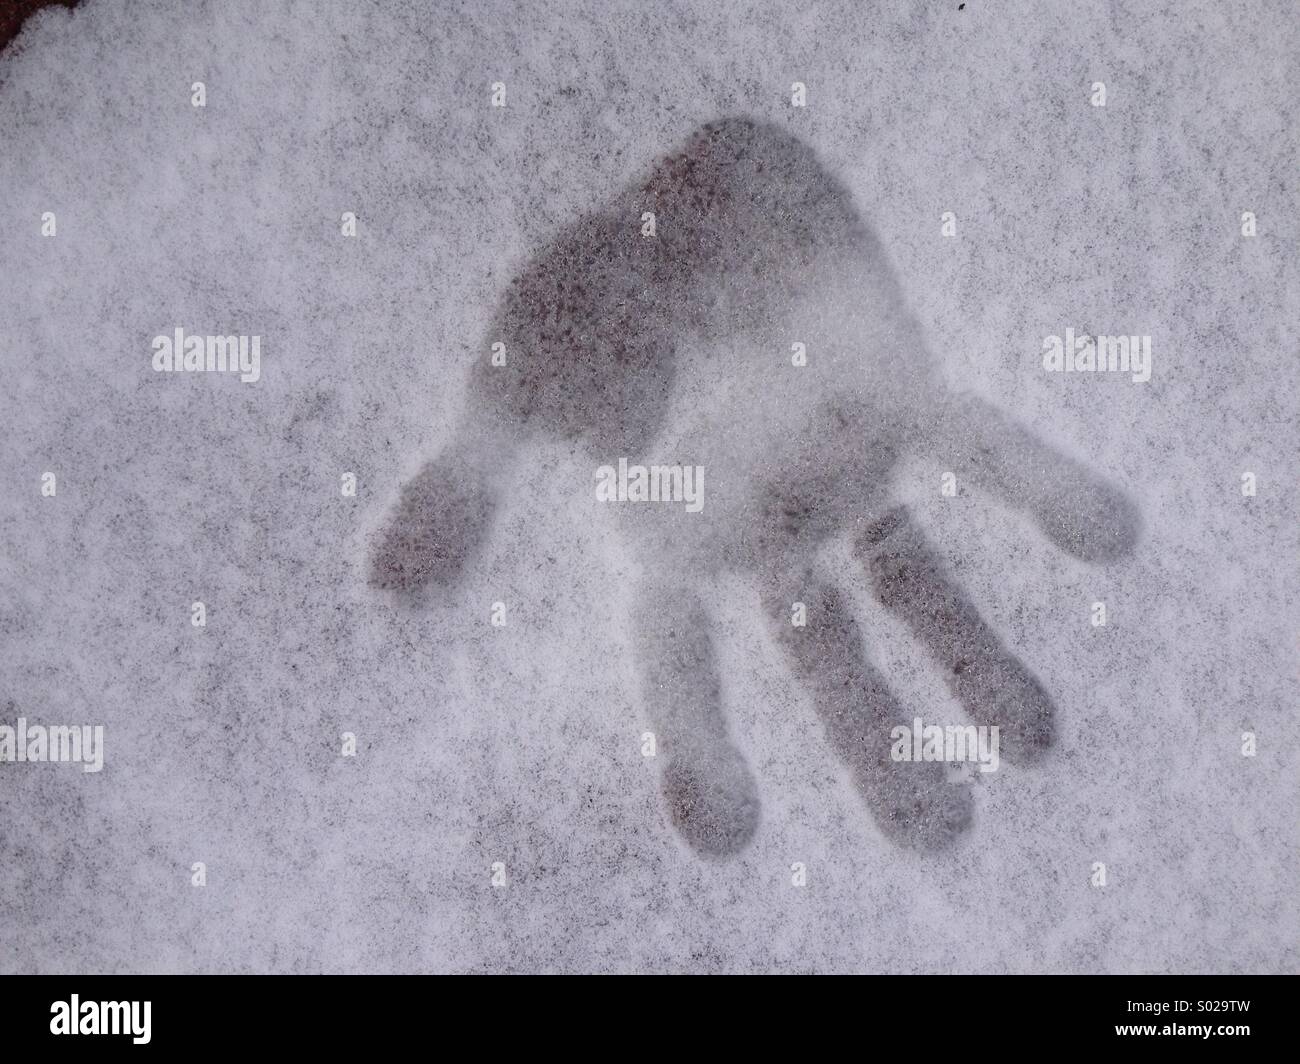 Handprint in light snow Stock Photo